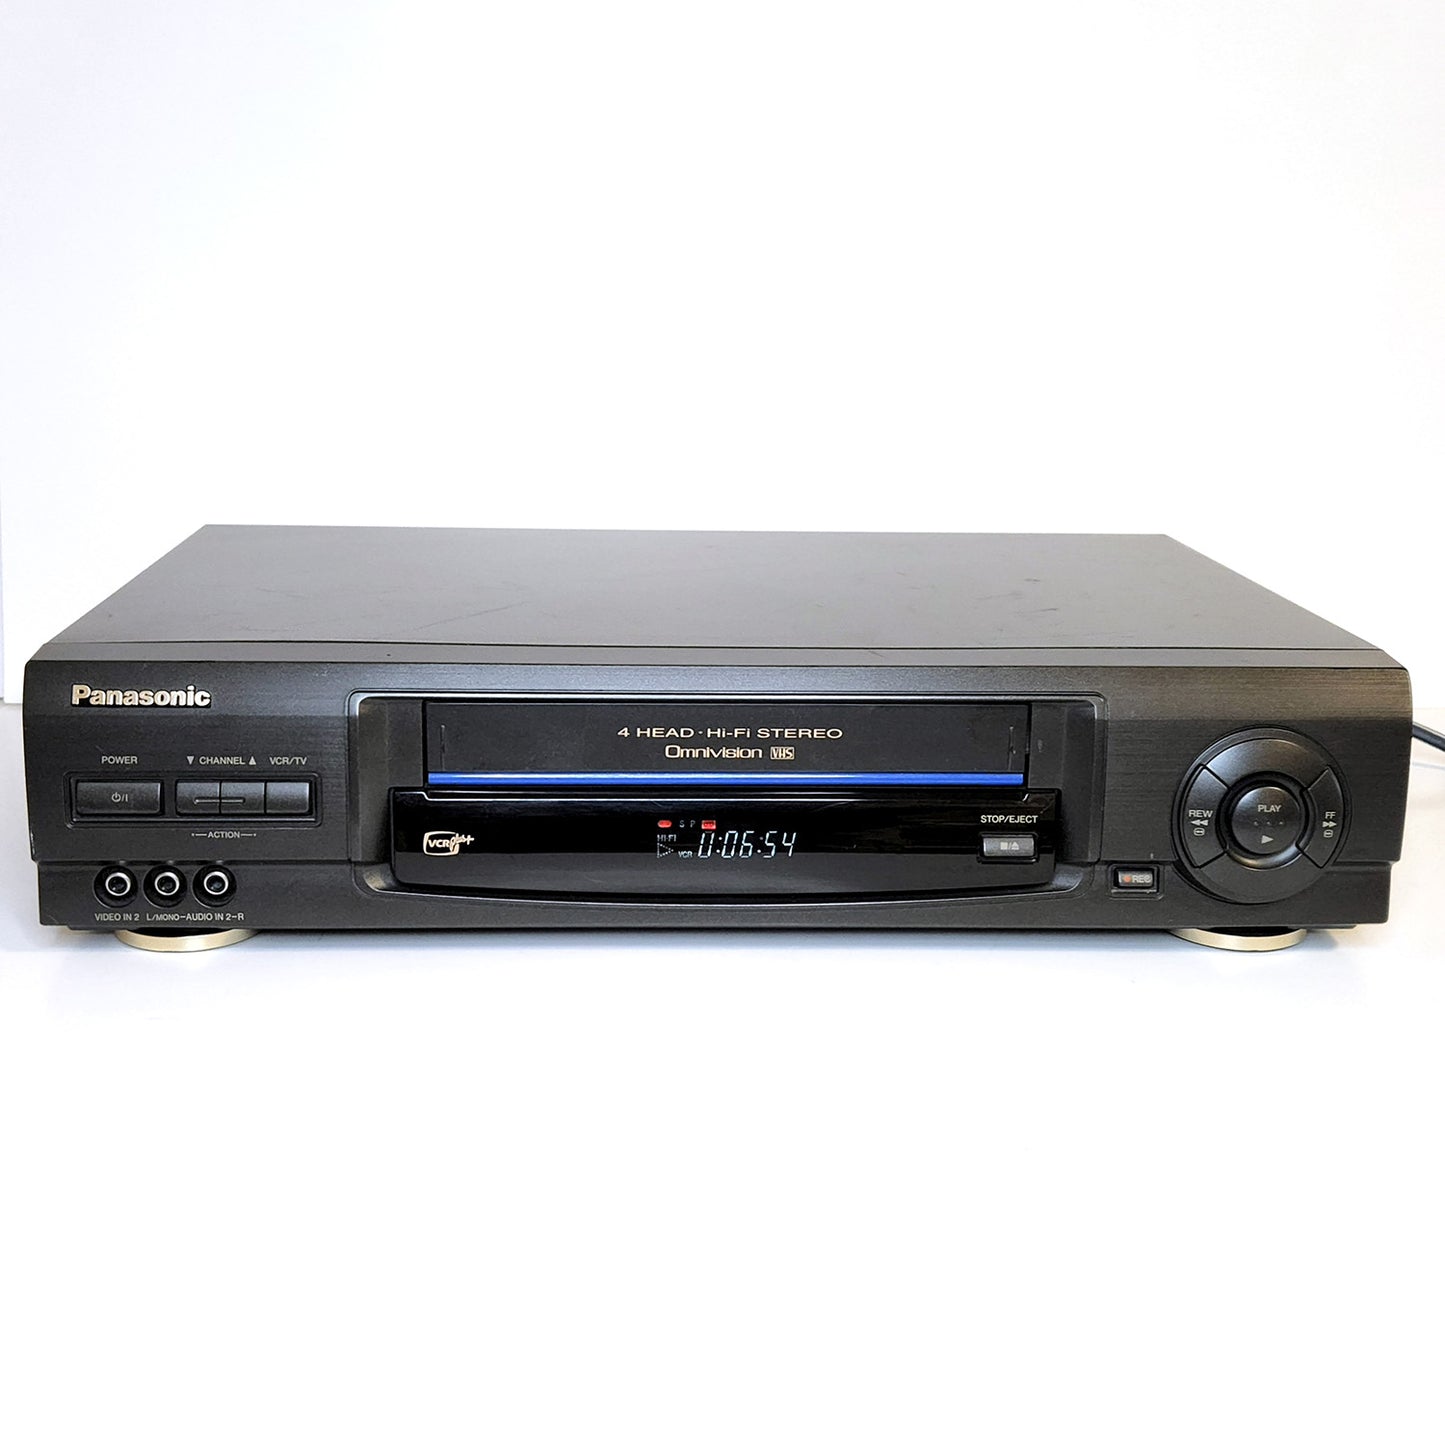 Panasonic PV-V4600 Omnivision VCR, 4-Head Hi-Fi Stereo - Front